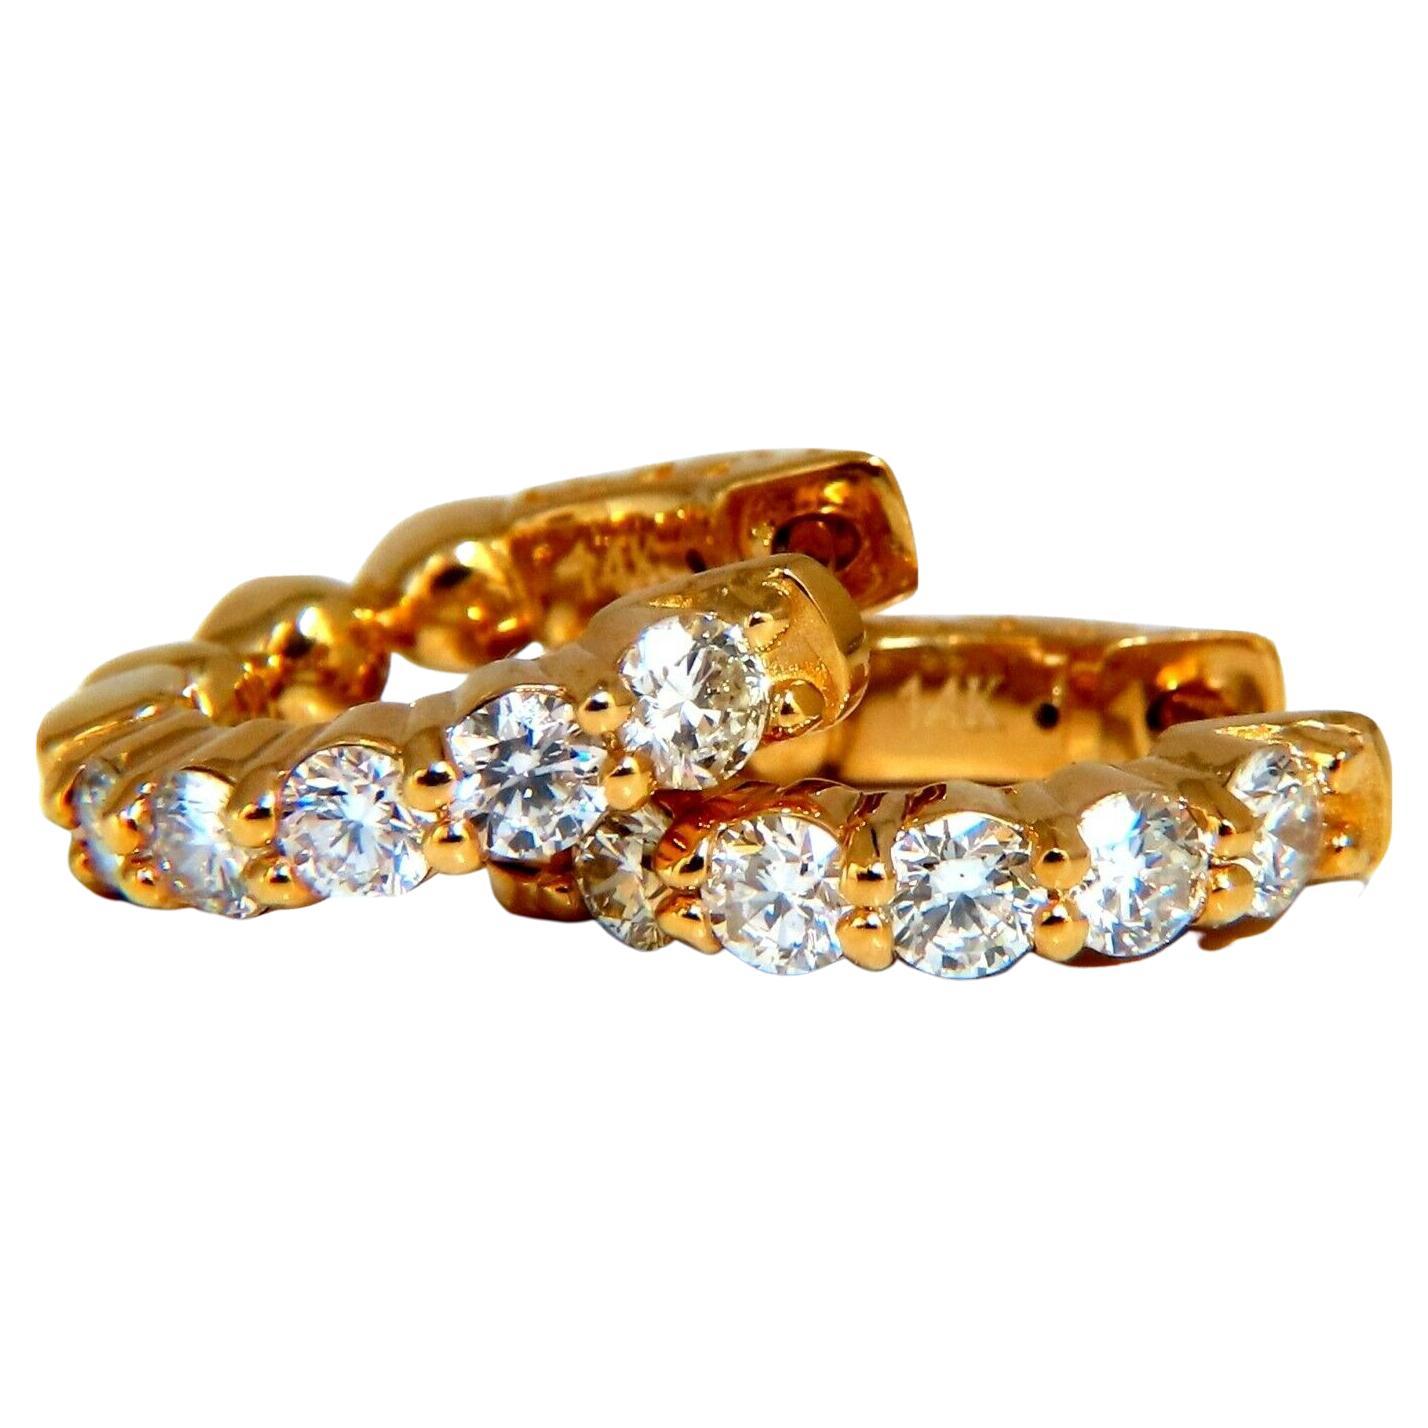 Mini boucles d'oreilles en or jaune 14 carats avec diamants ronds naturels de 0,88 carat